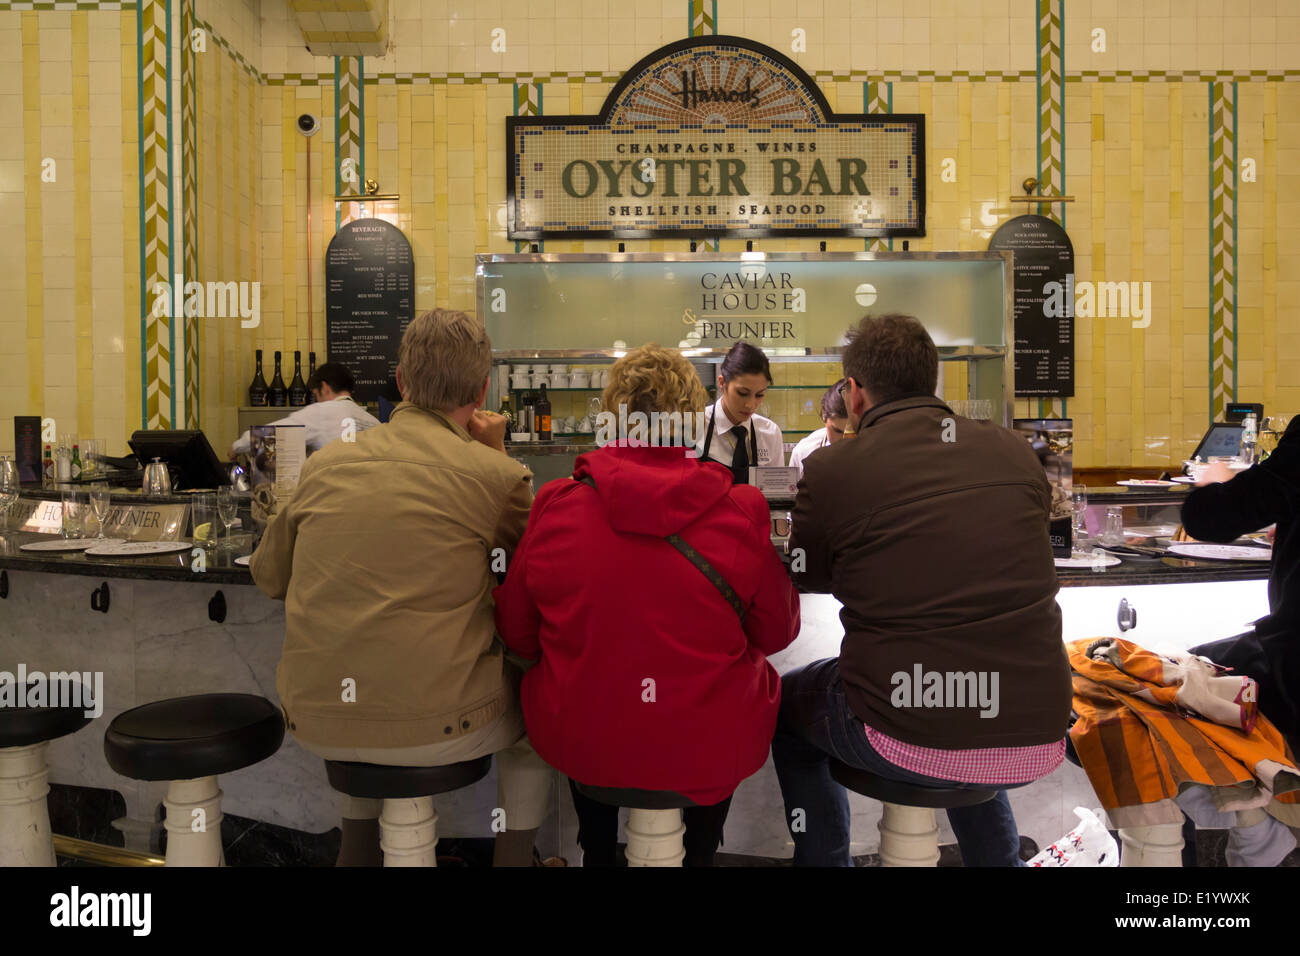 Oyster Bar - Harrods Food Hall - Knightsbridge - London Stock Photo